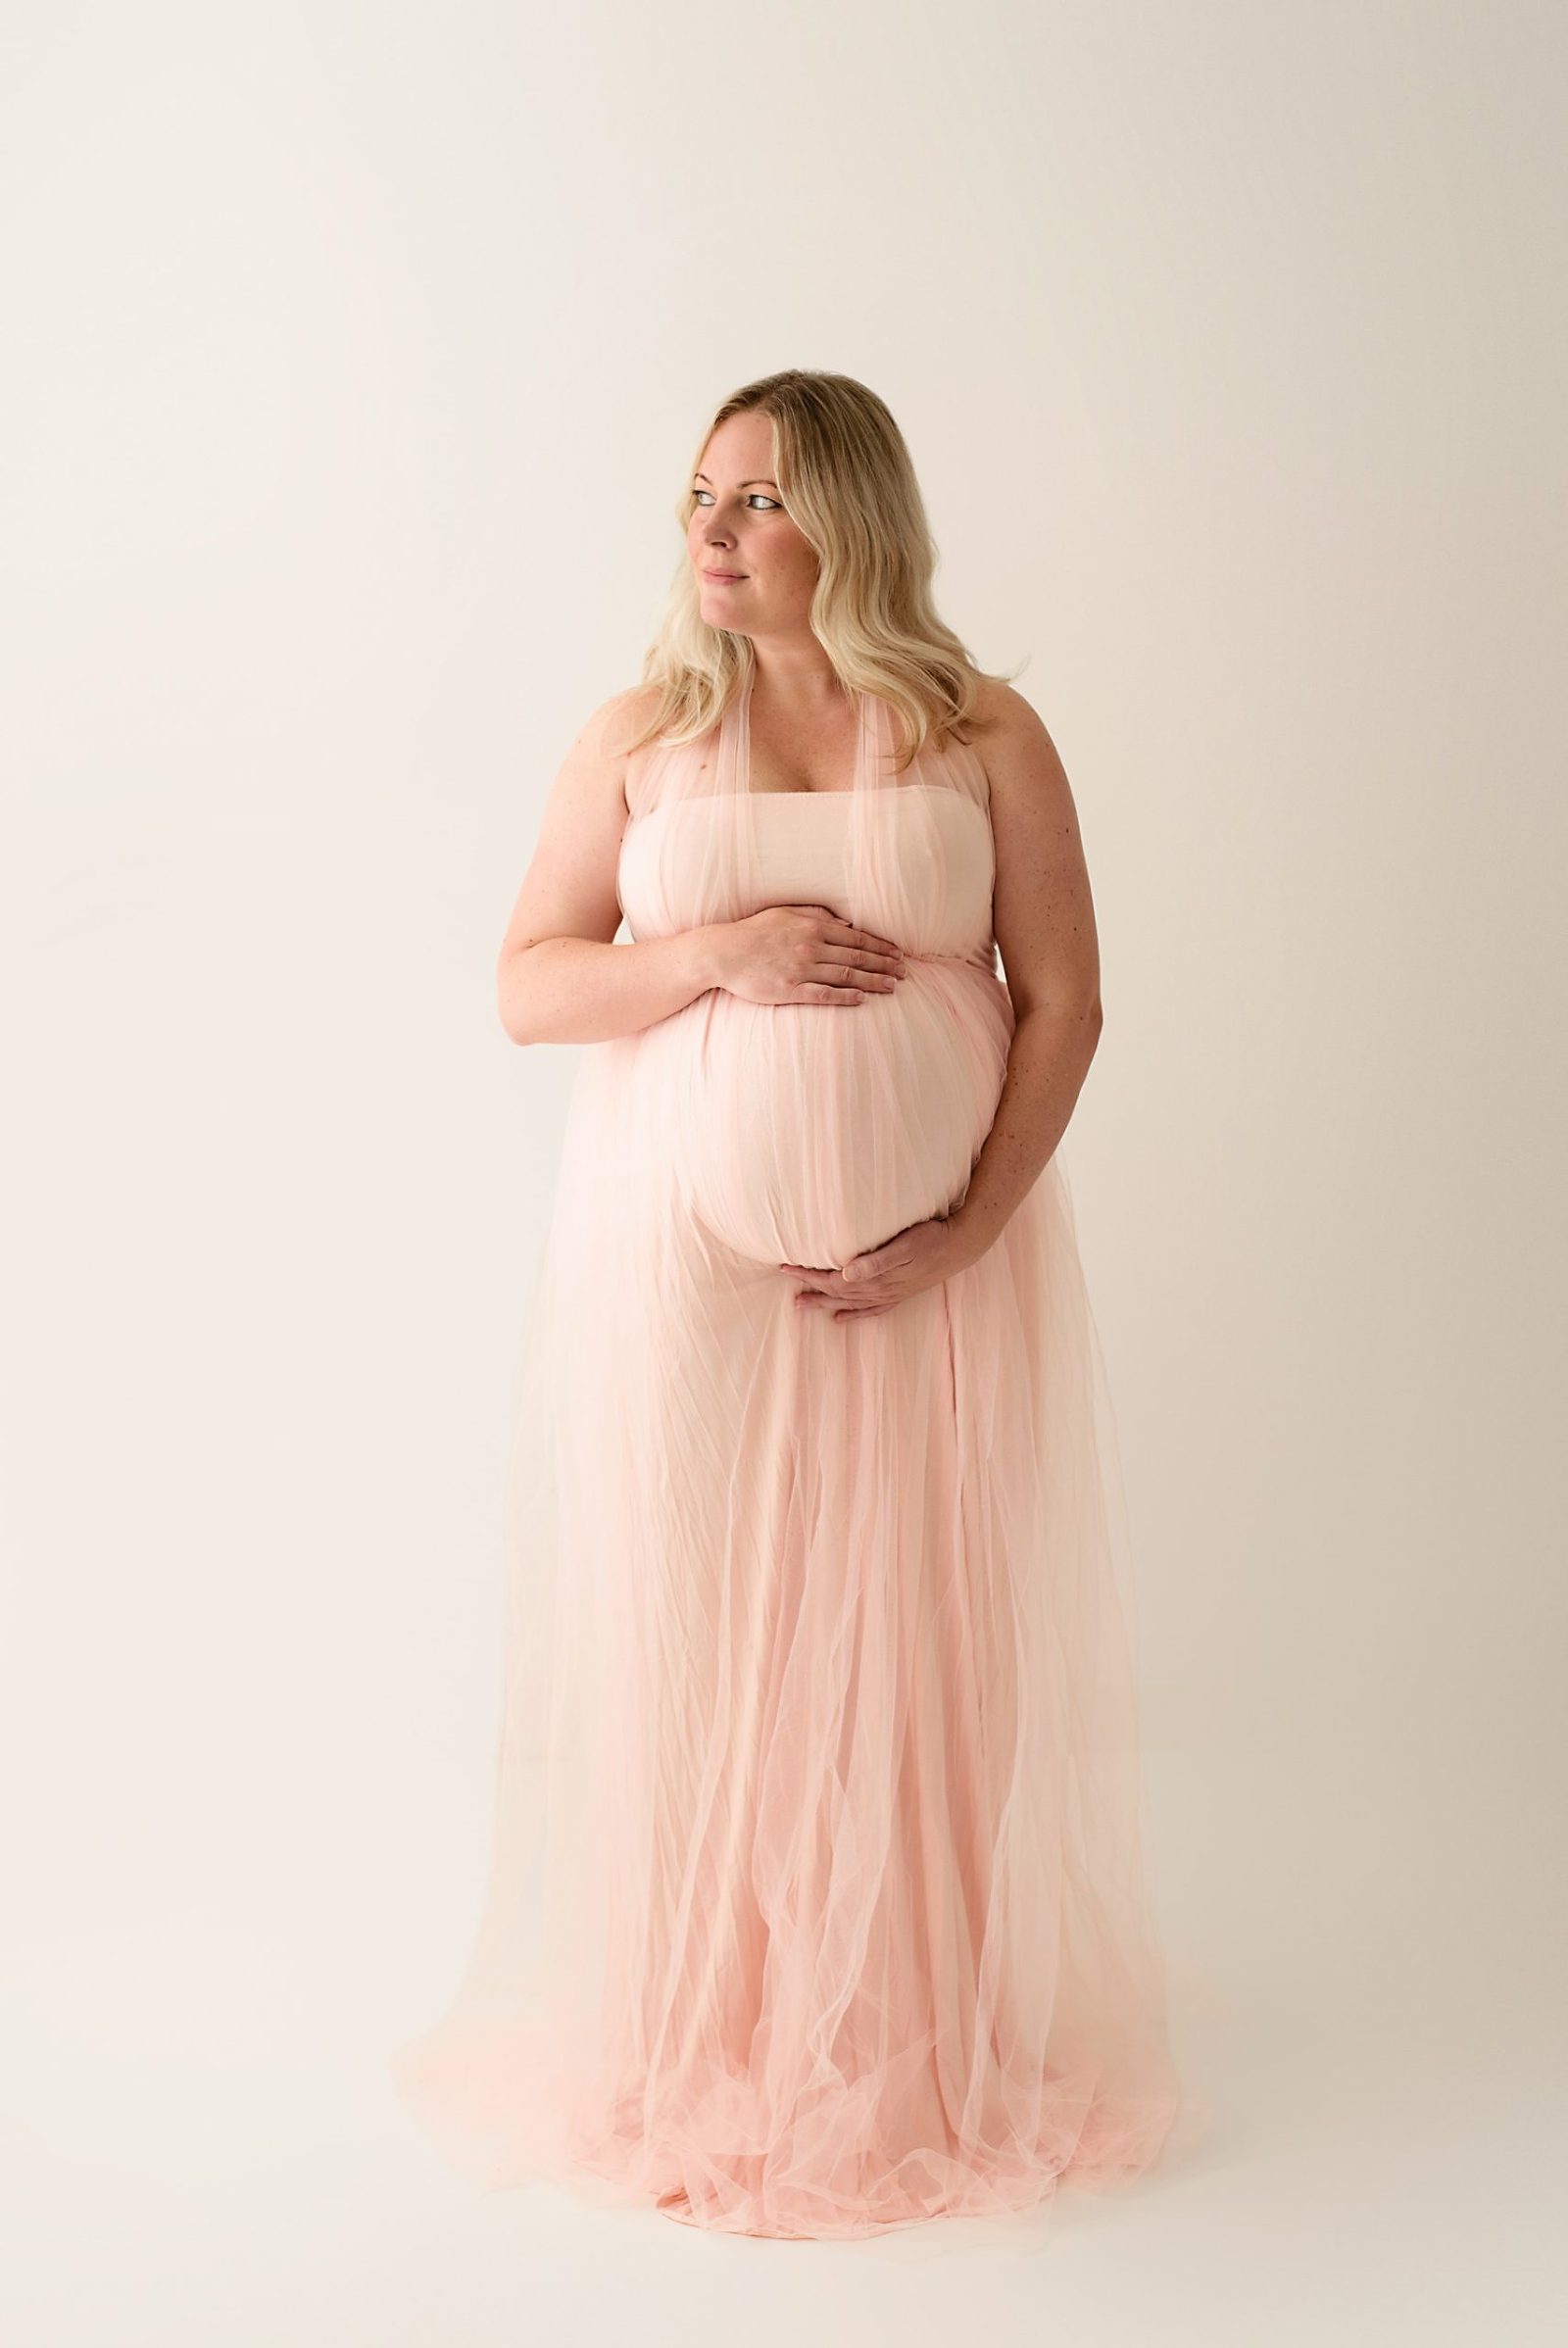 in-studio maternity photoshoot pink dress